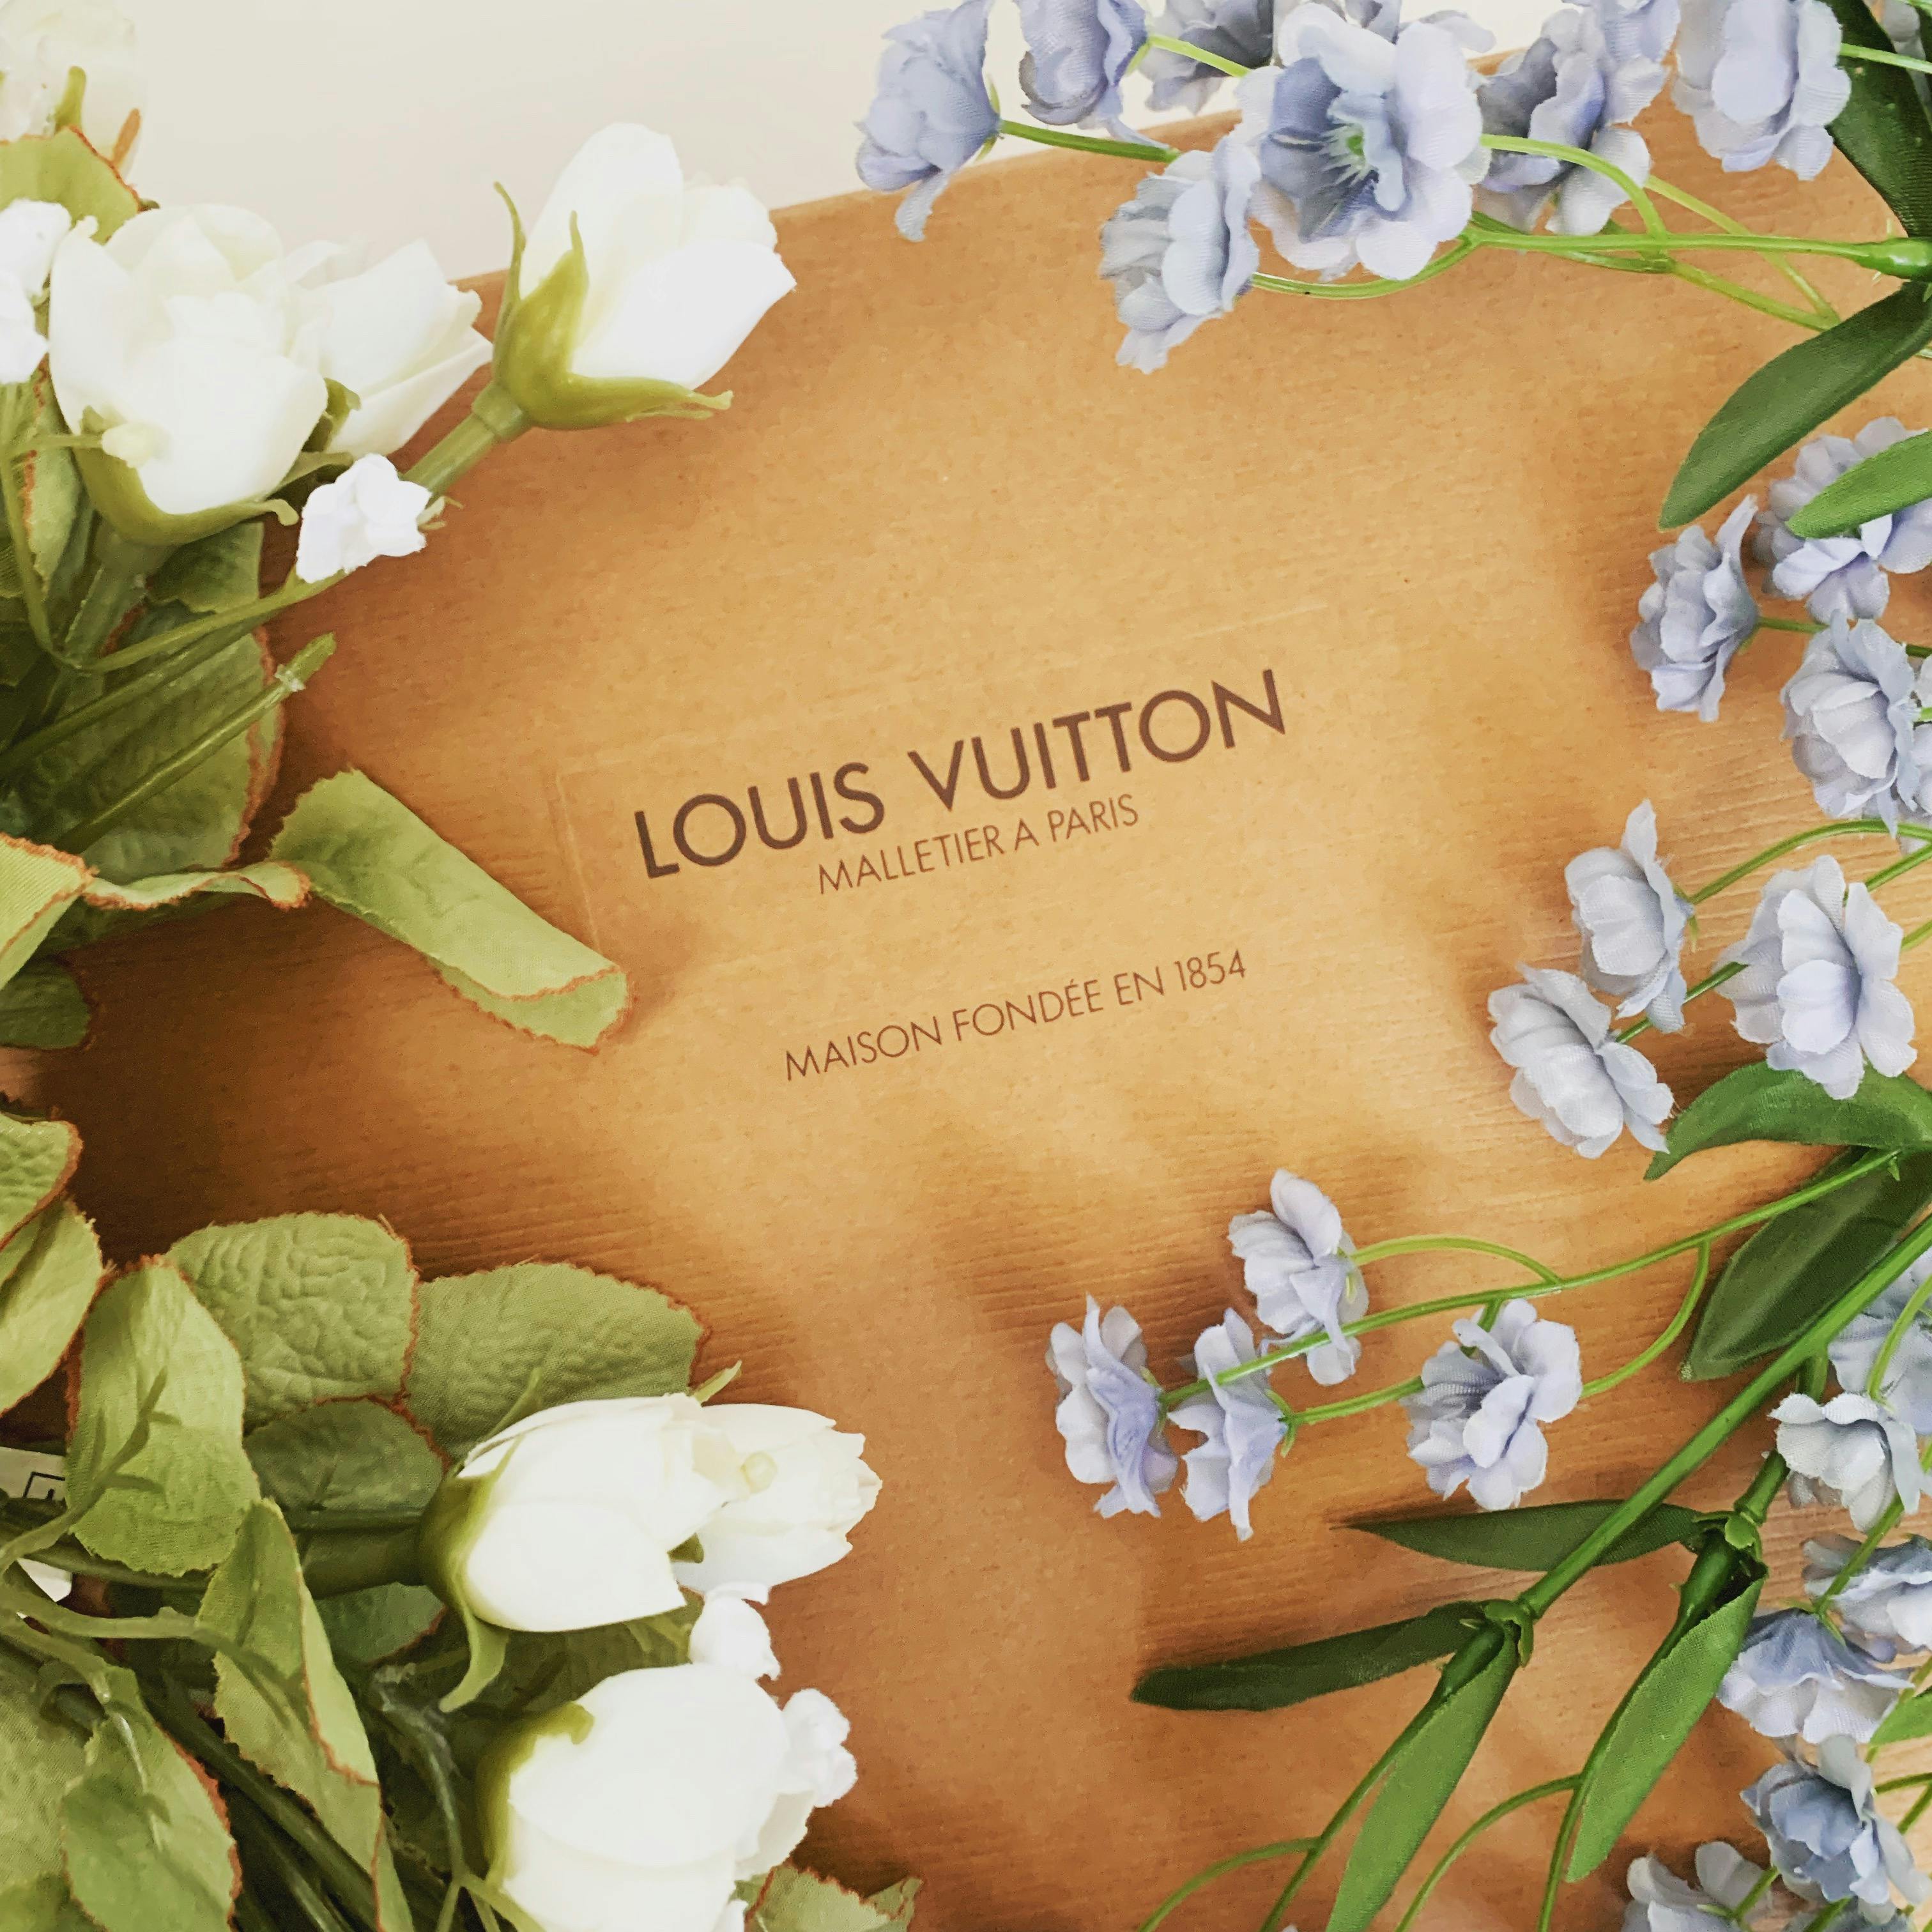 Louis Vuitton Photos, Download The BEST Free Louis Vuitton Stock